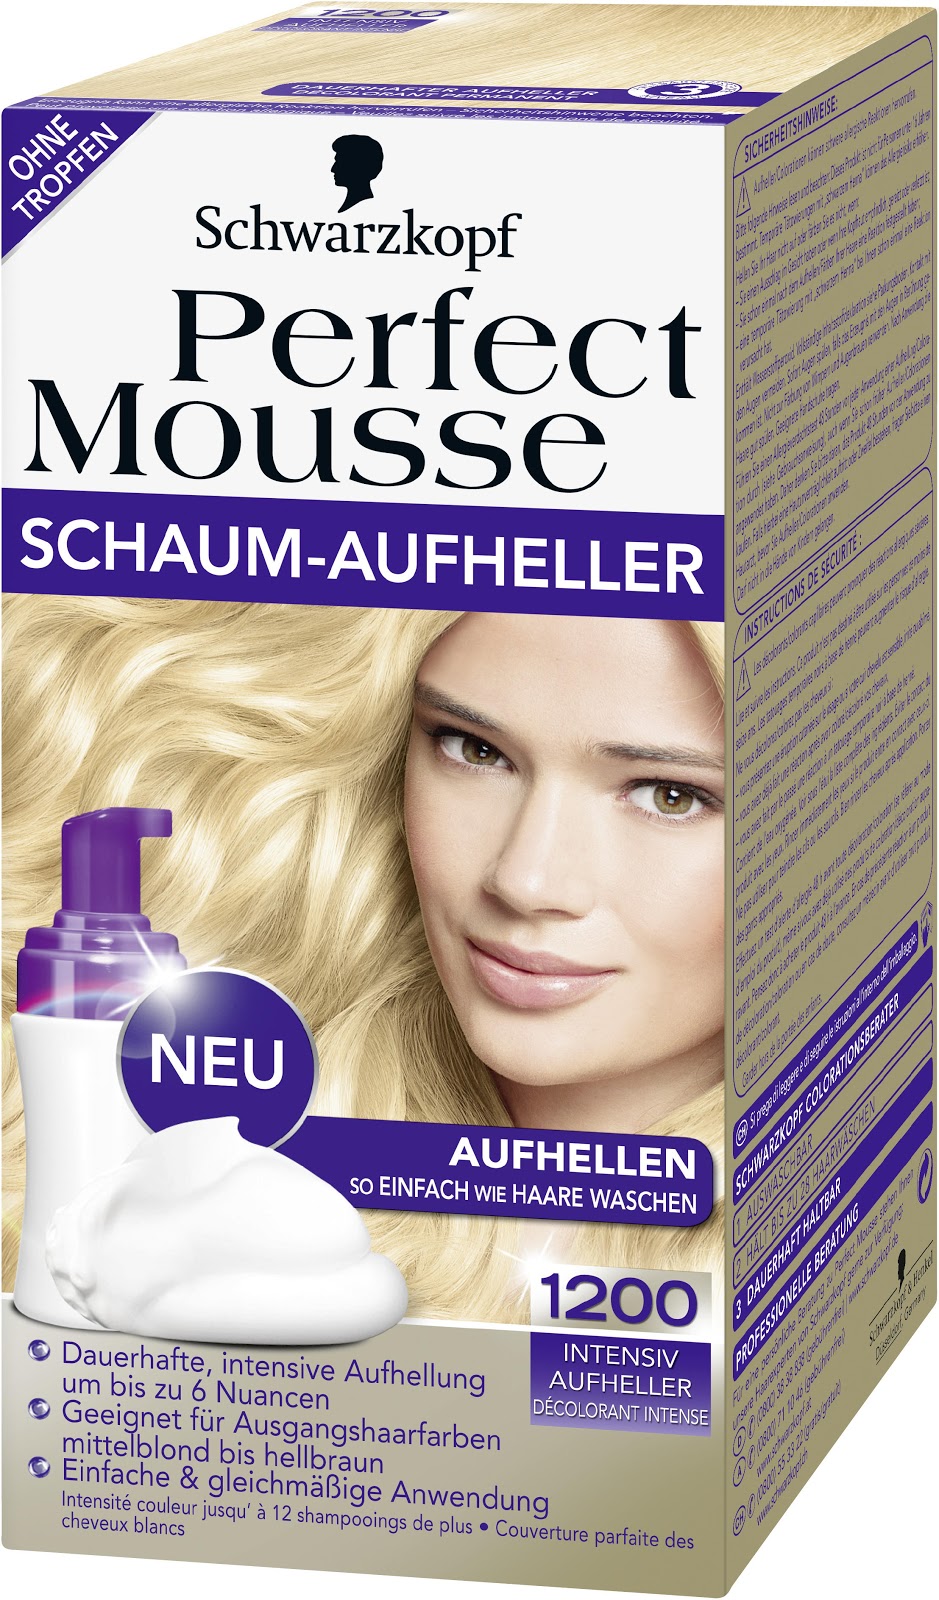 Schwarzkopf Perfect Mousse Schaum-Aufheller, veschiedene Stärken ...  width=